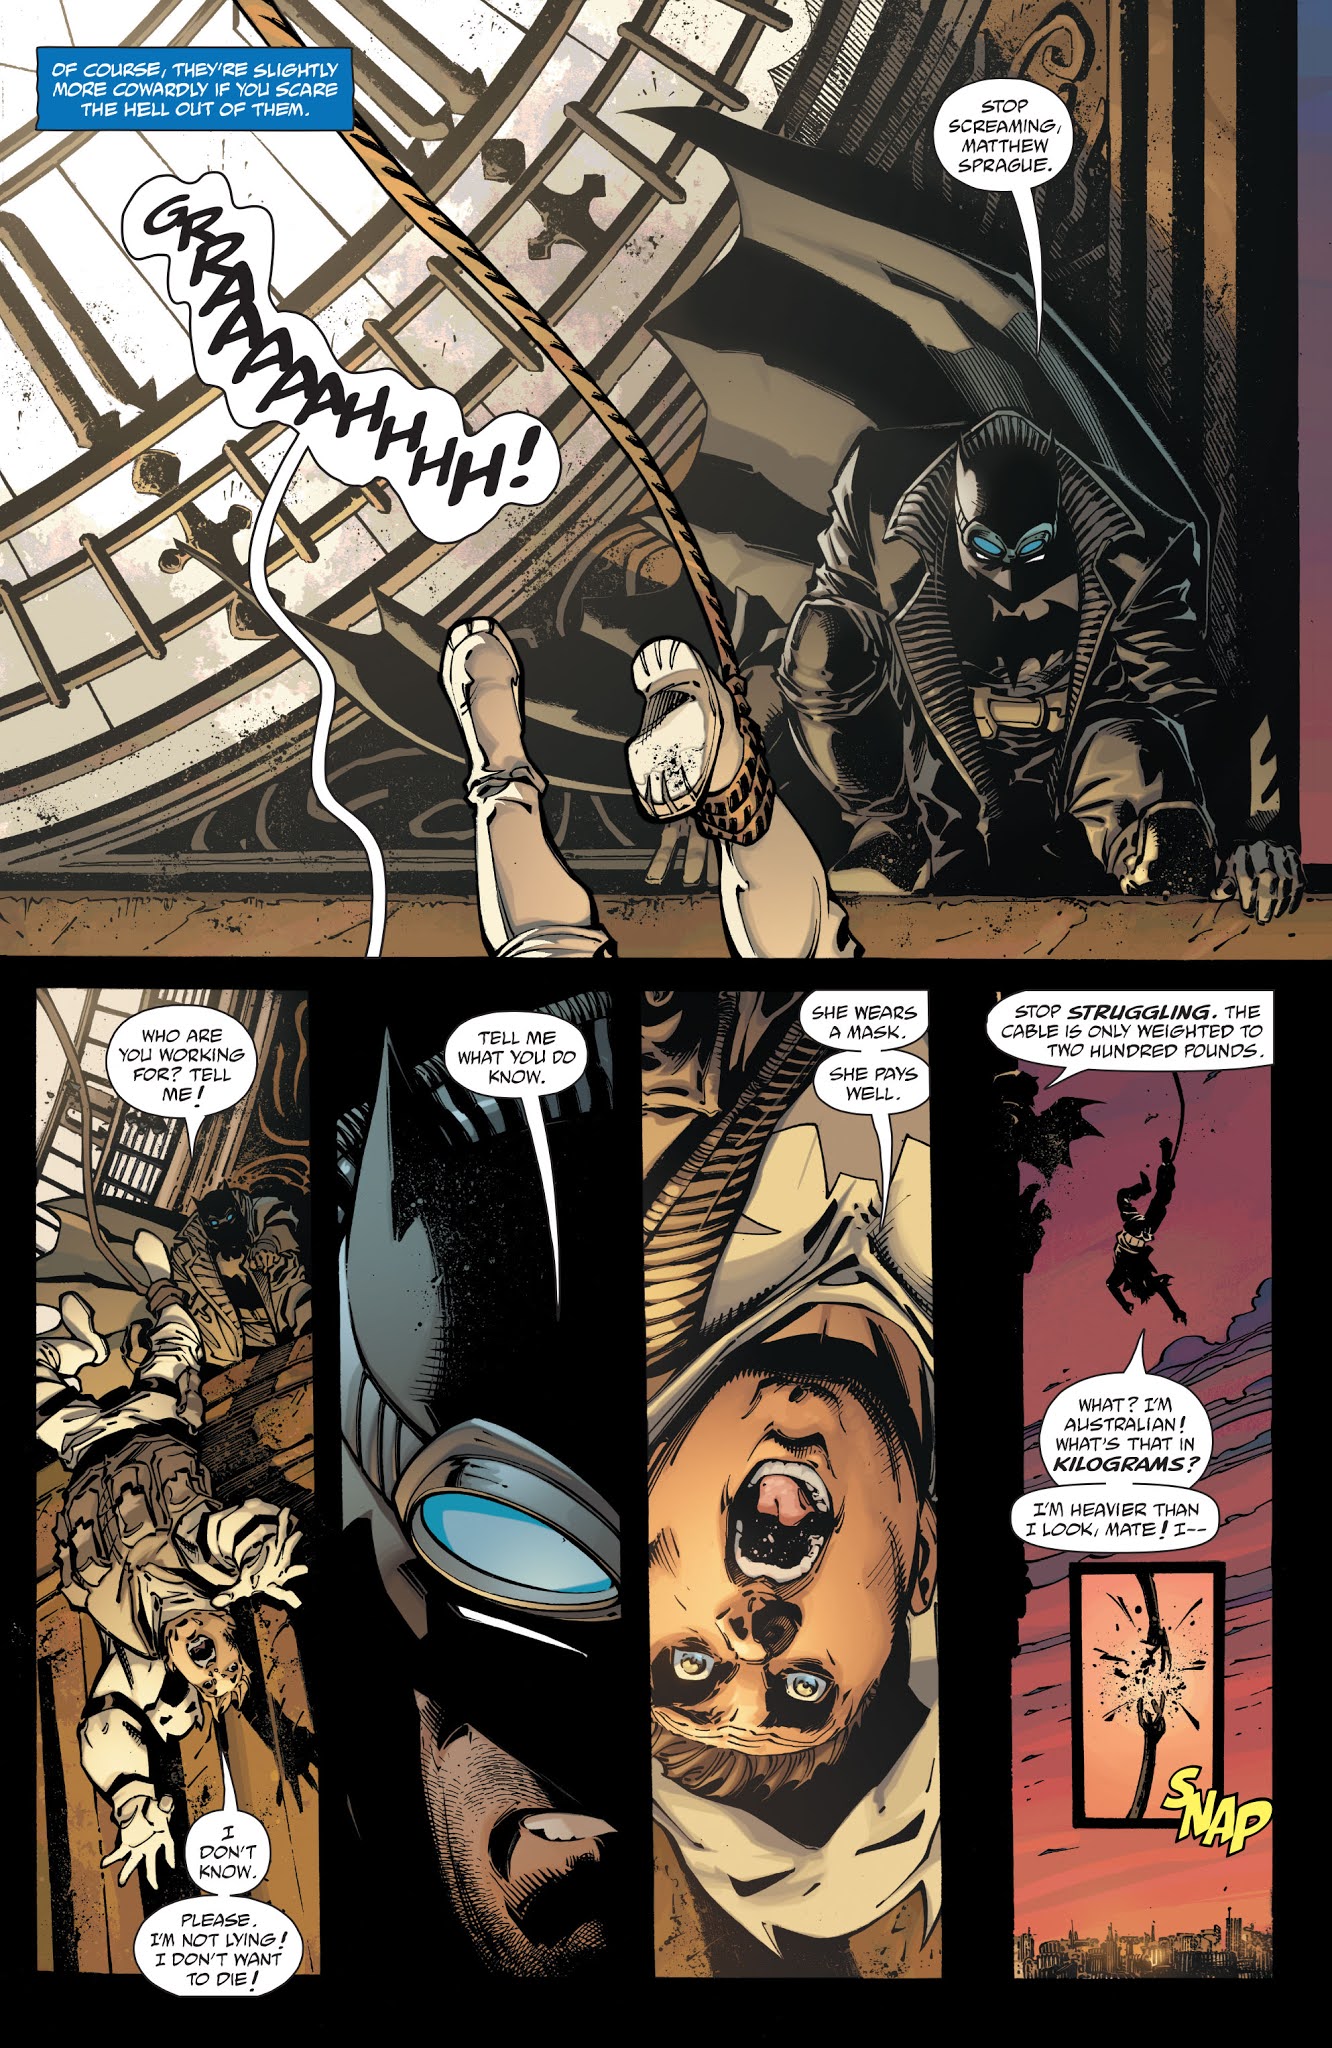 Weird Science DC Comics: Batman: The Detective #2 Review